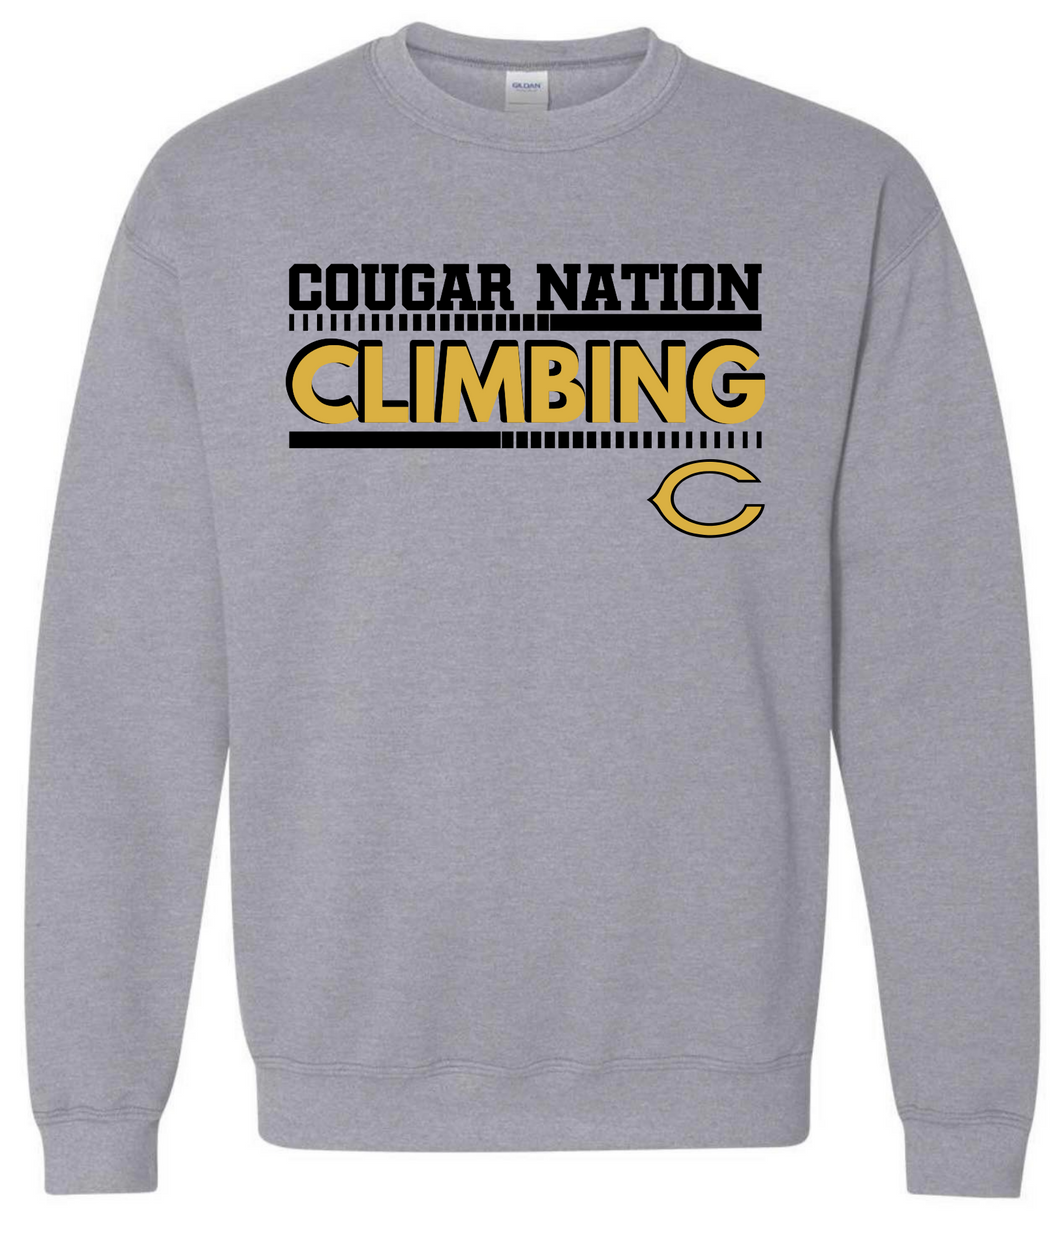 Cougar Nation Climbing Sweatshirt